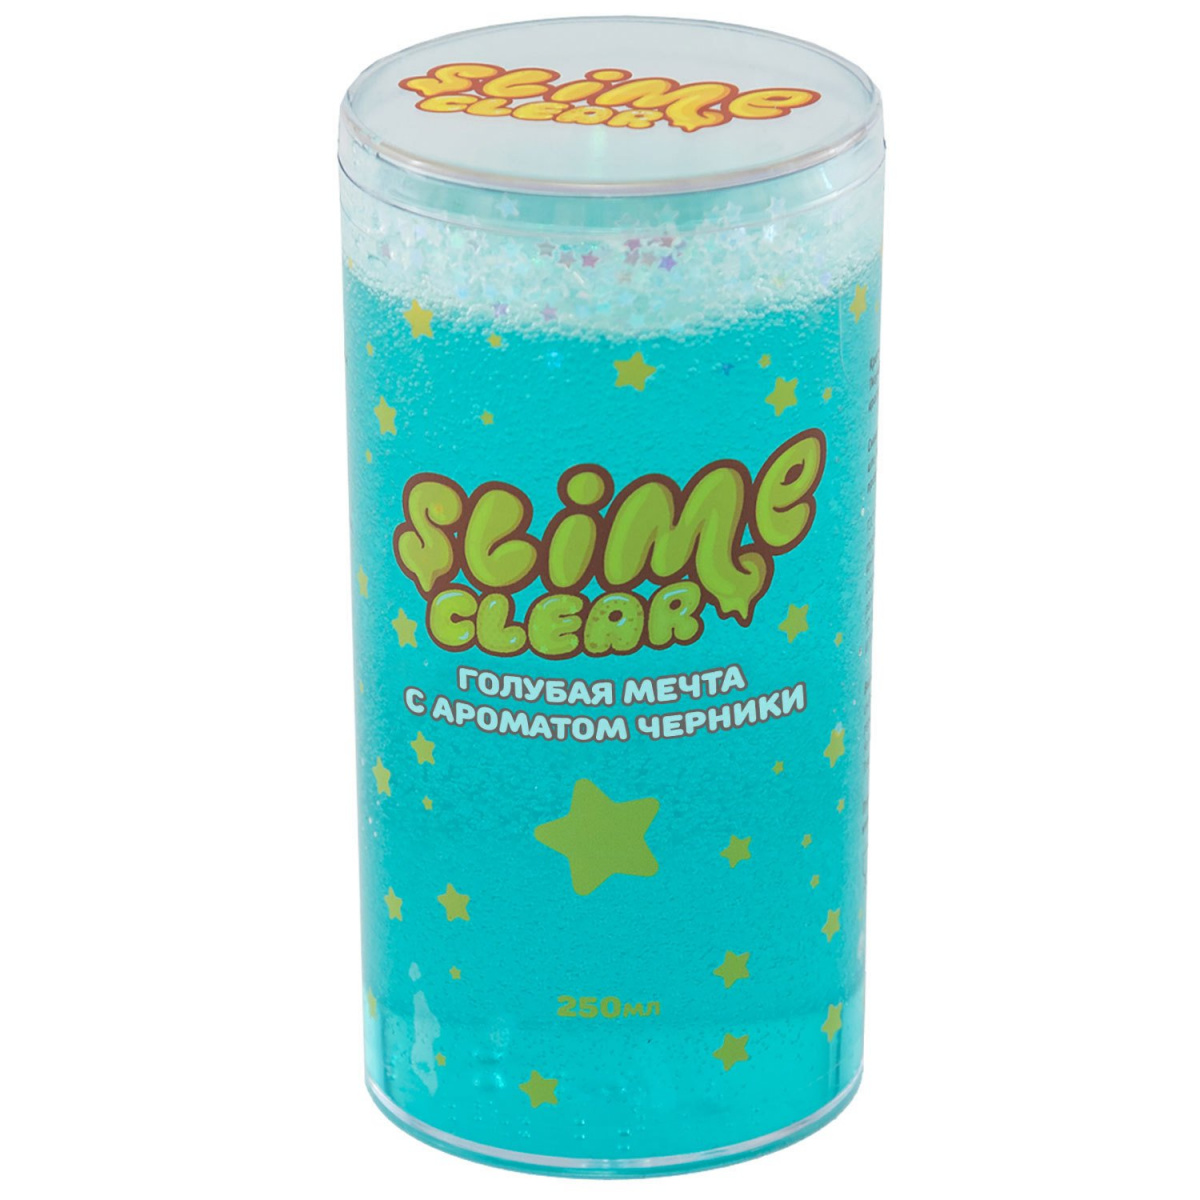 Slime-Clear S300-35 Голубая мечта с ароматом черники, 250 г